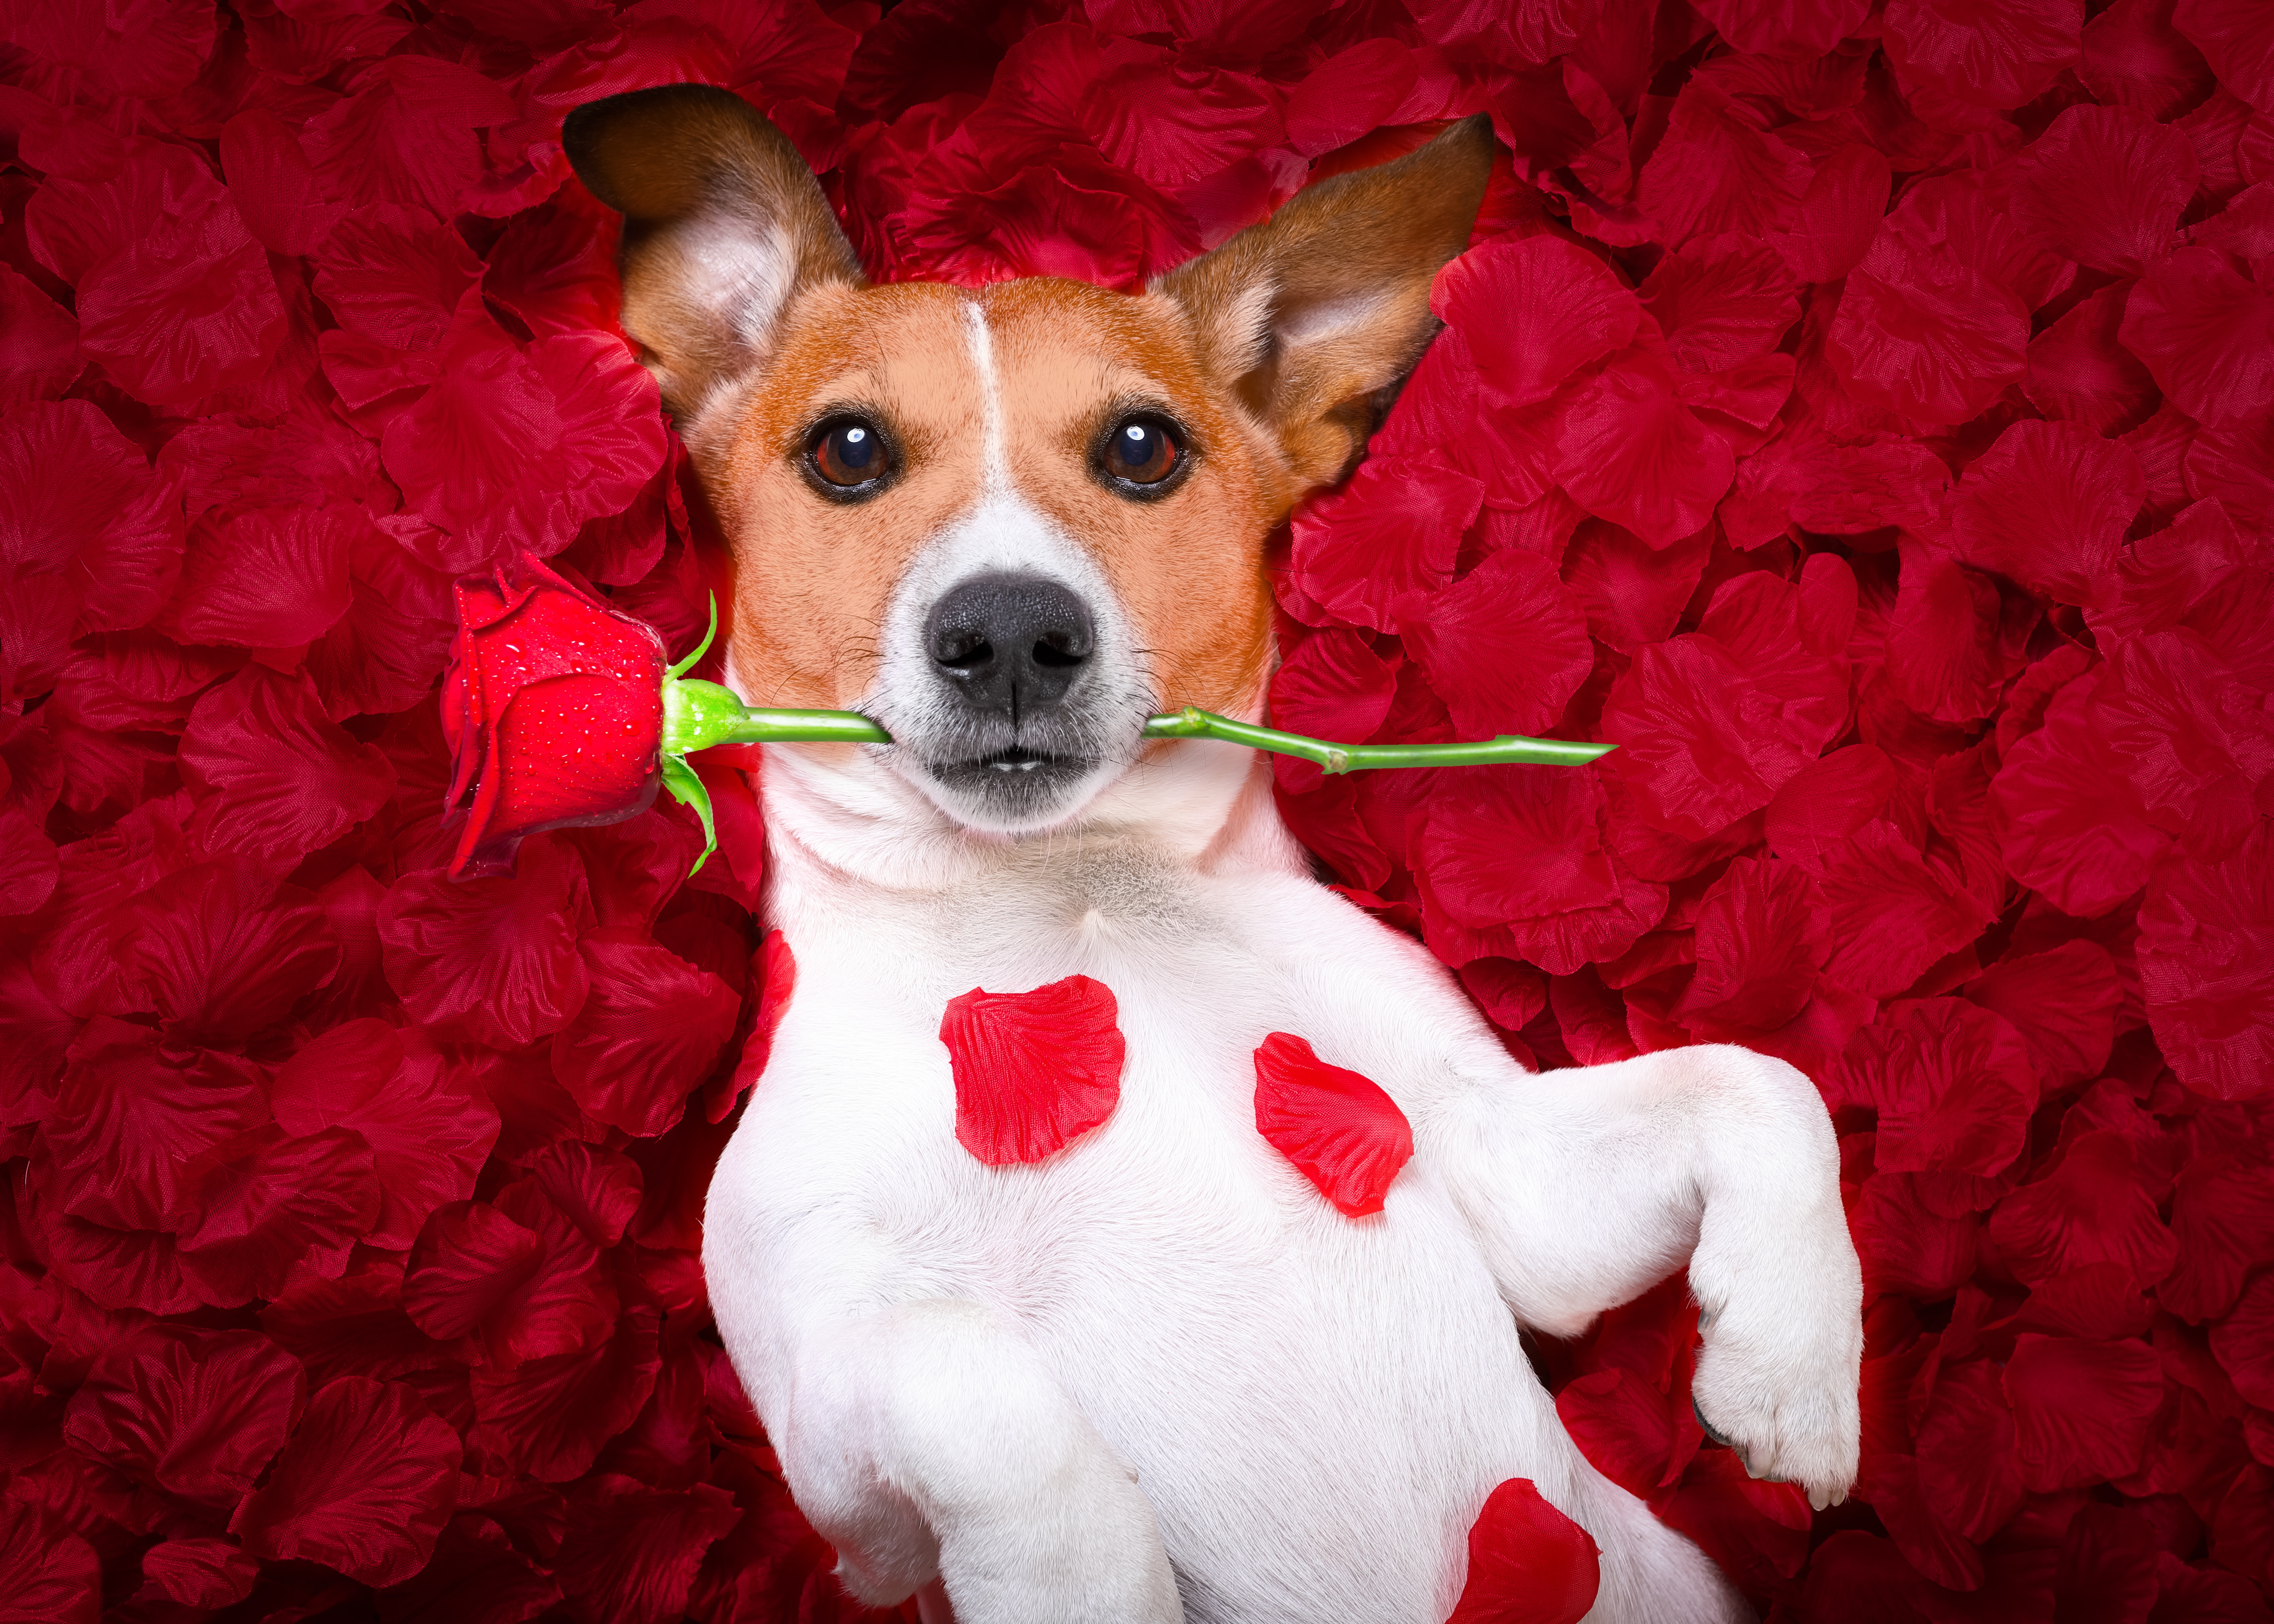 Animal Jack Russell Terrier 4k Ultra HD Wallpaper